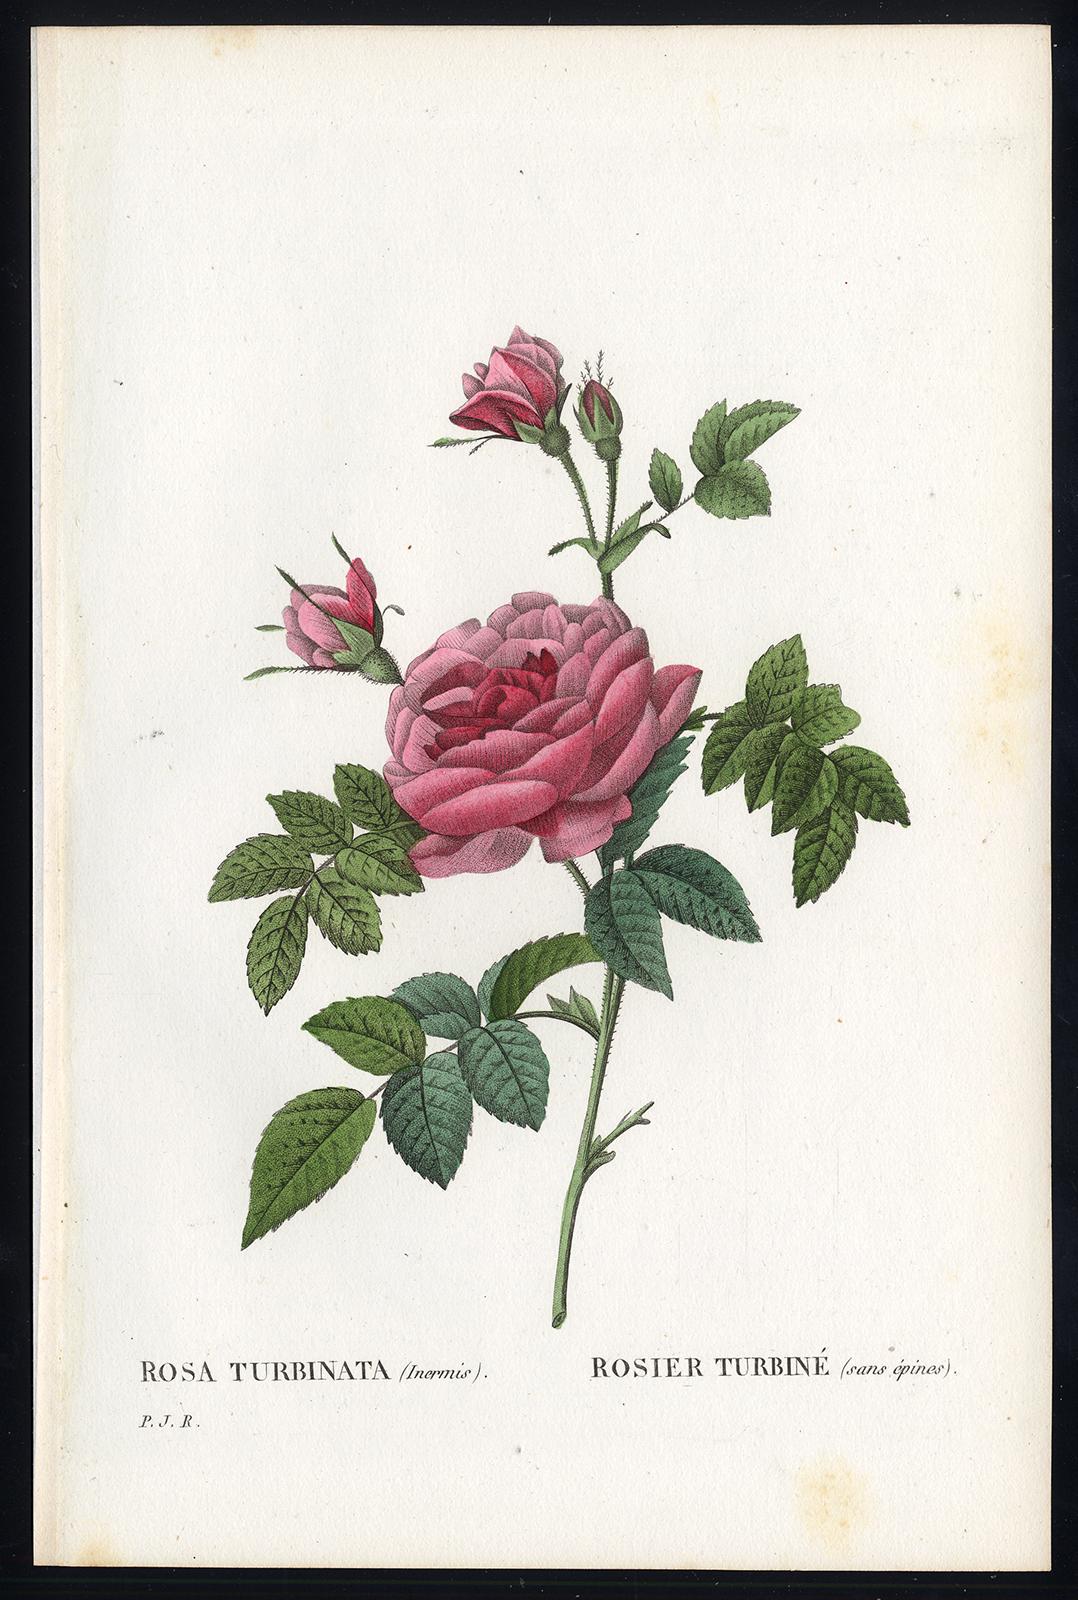 Pierre-Joseph Redouté Print - Rosa Turbinata by Redoute - Les Roses - Handcoloured engraving - 19th century